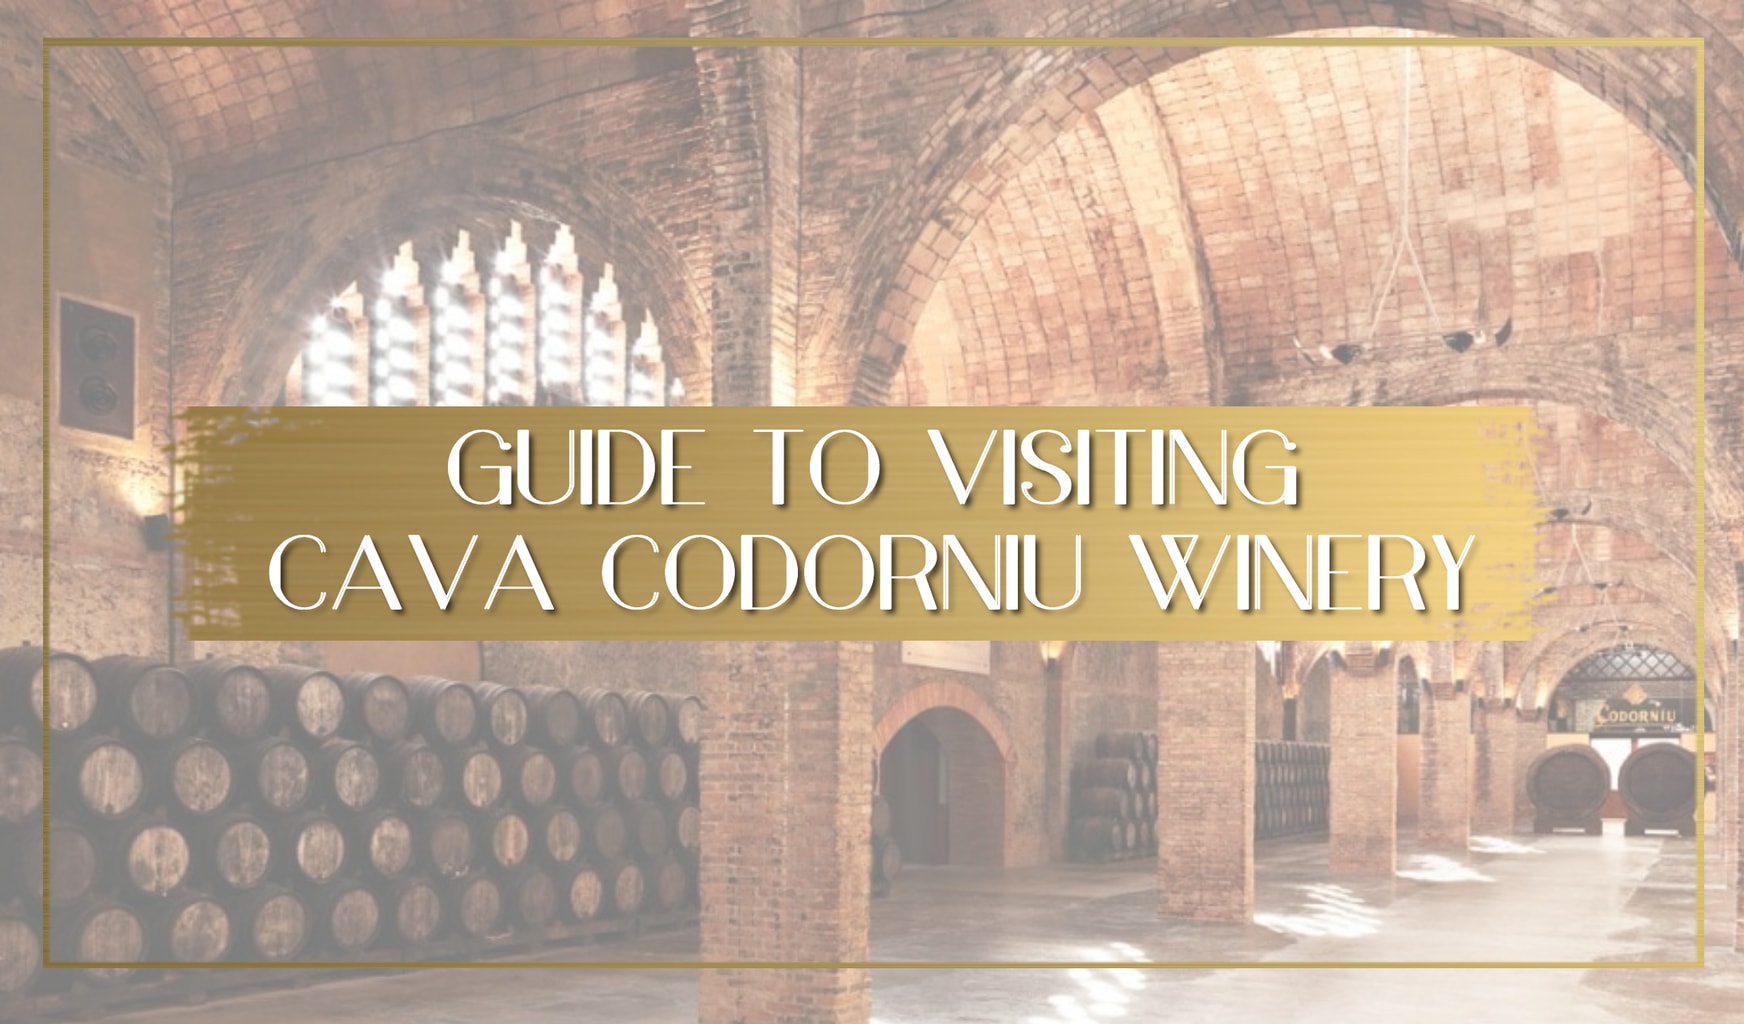 Cava Codorniu Winery main